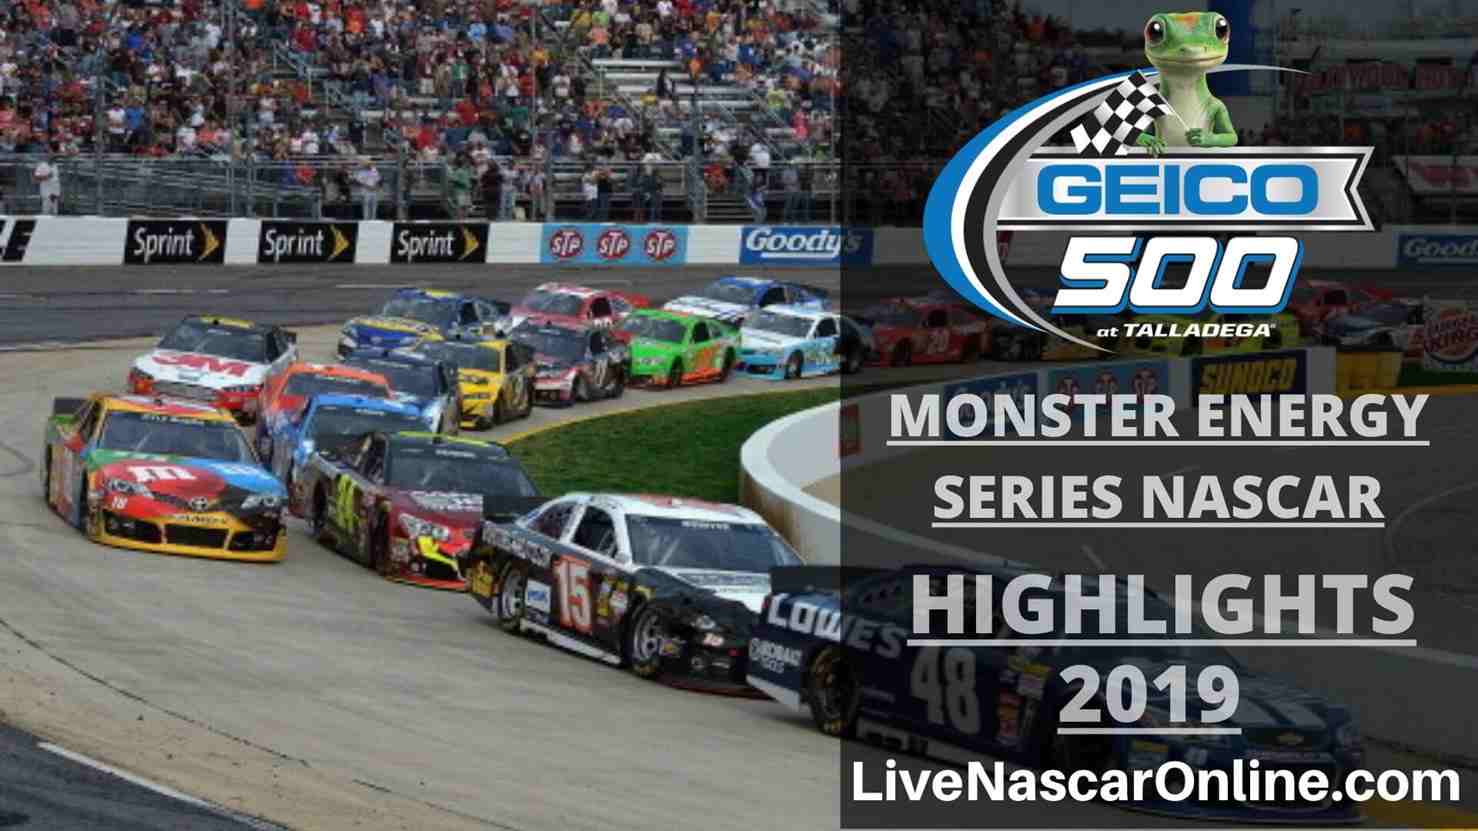 NASCAR Monster Energy Series GEICO 500 HIGHLIGHTS 2019